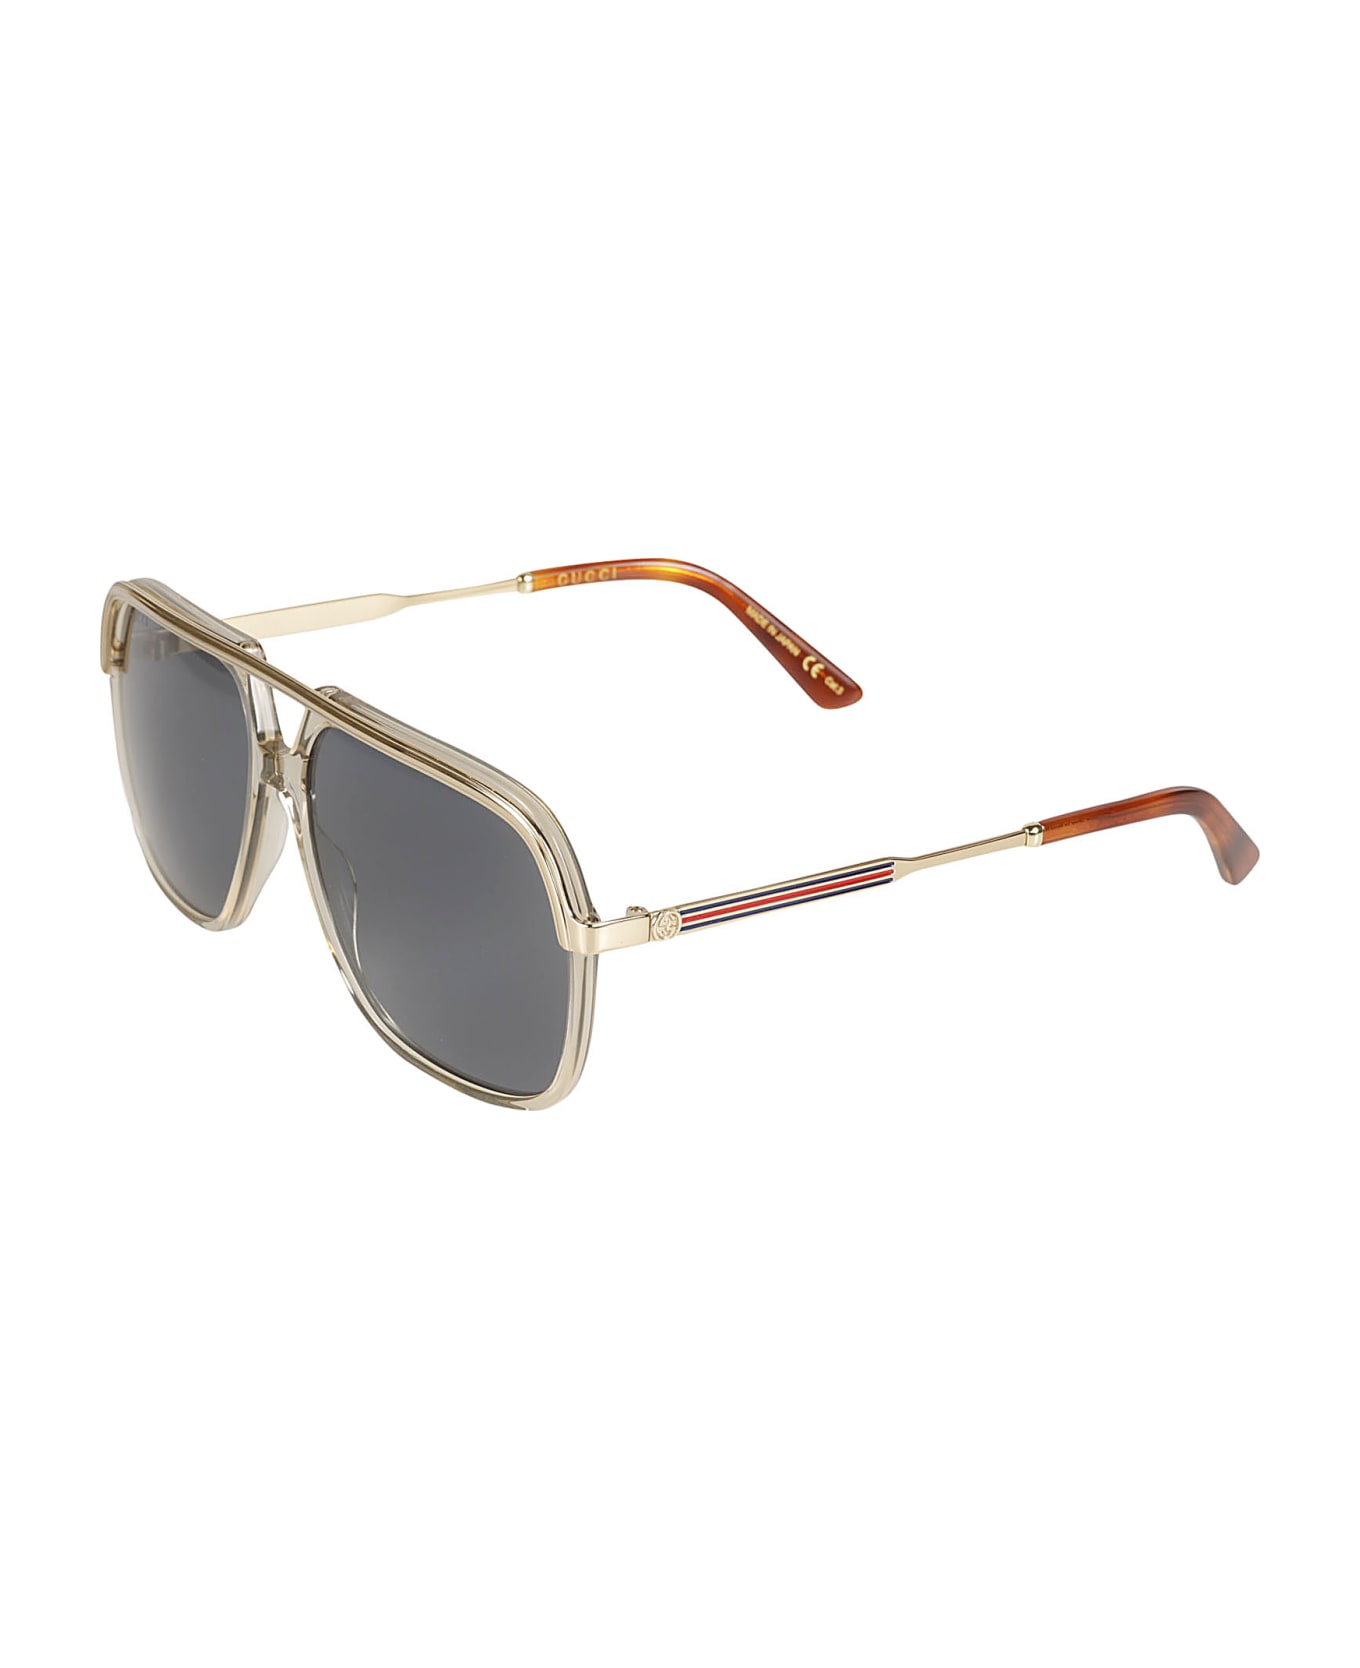 Gucci Eyewear Aviator Sunglasses - Brown/Gold